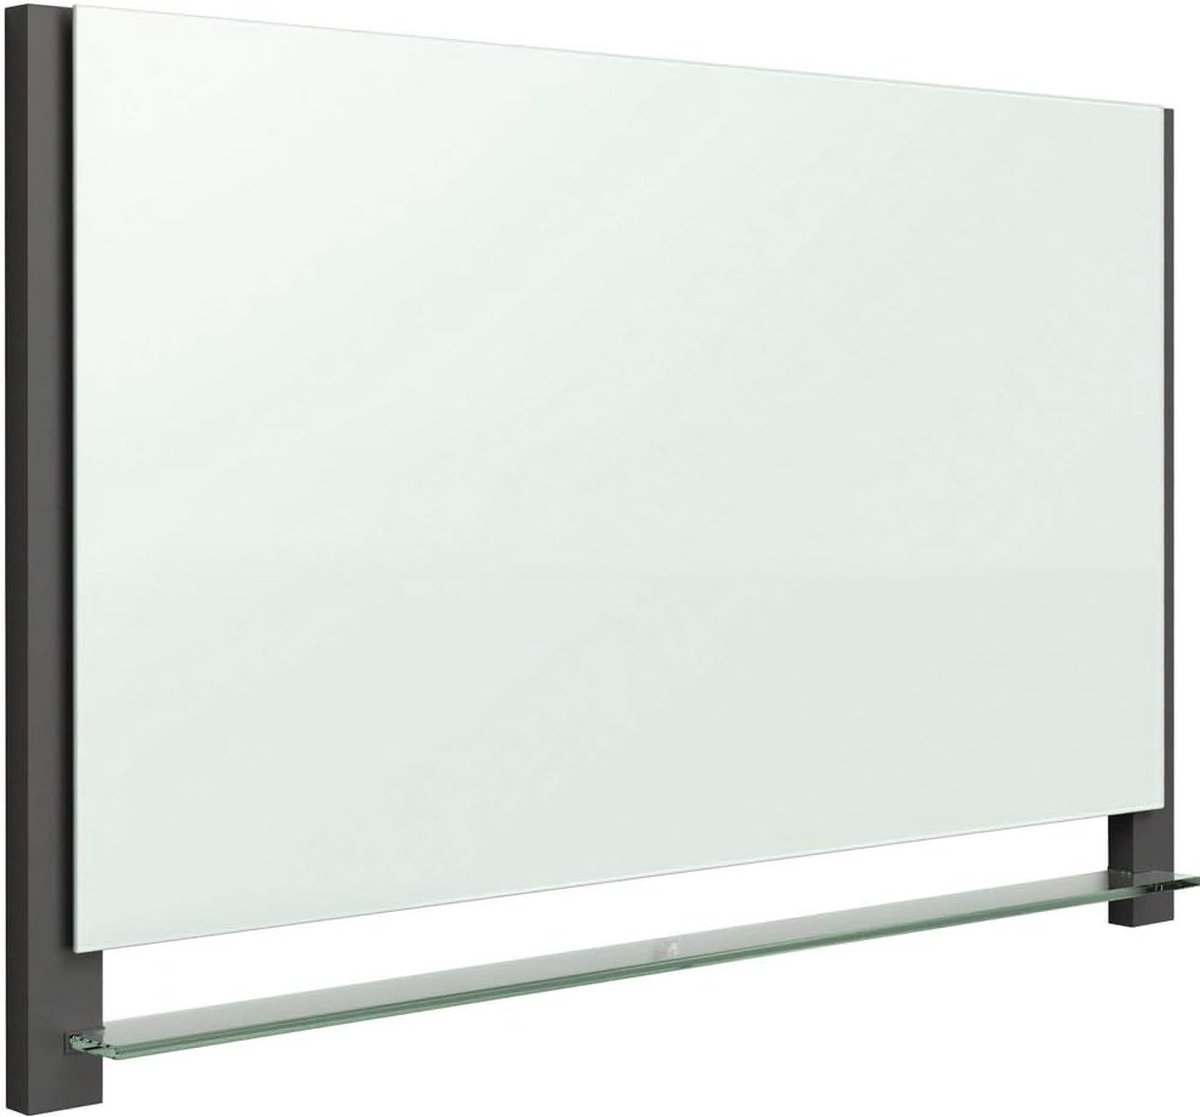 Faseras Whiteboard/Glassboard - Glas - Magnetische Bord aan de Wand - Inclusief Marker - 120 x 60 cm